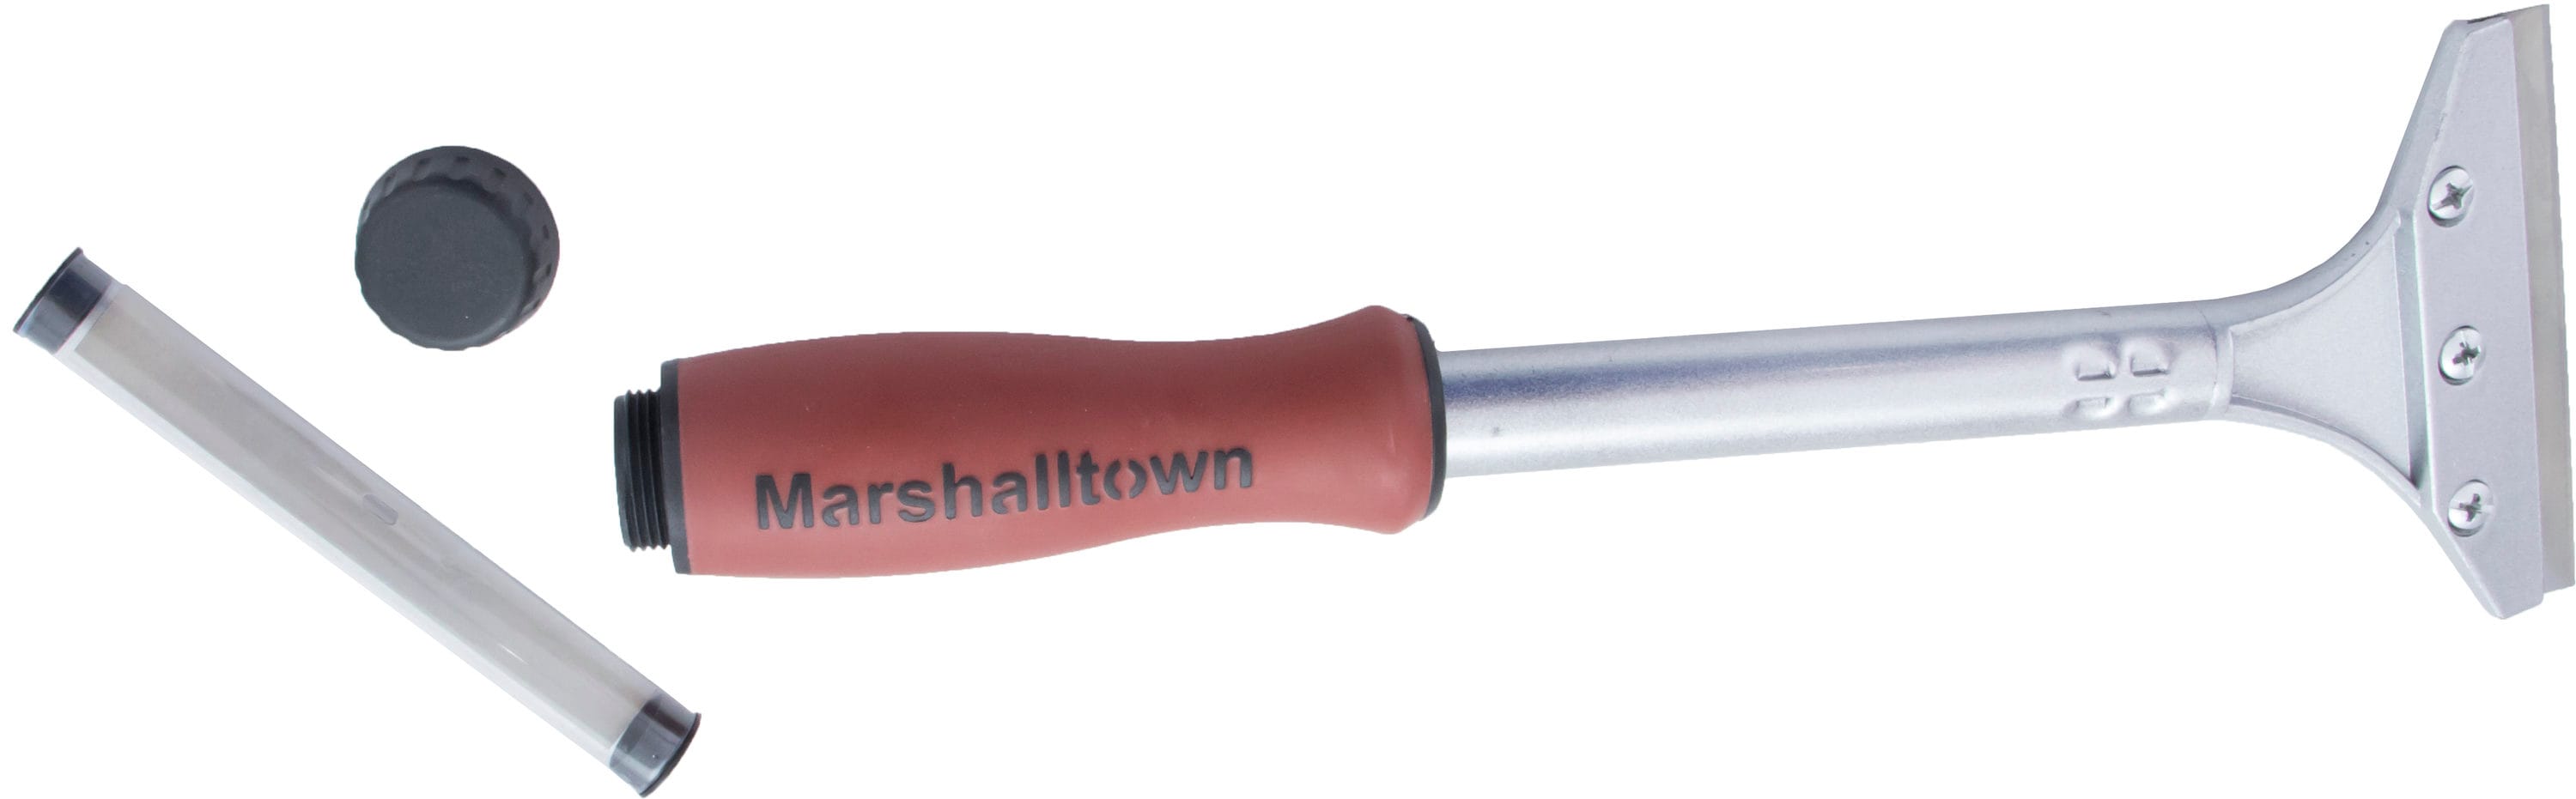 Marshalltown 18.5-in Adjustable Aluminum Carpet Knee Kicker in the